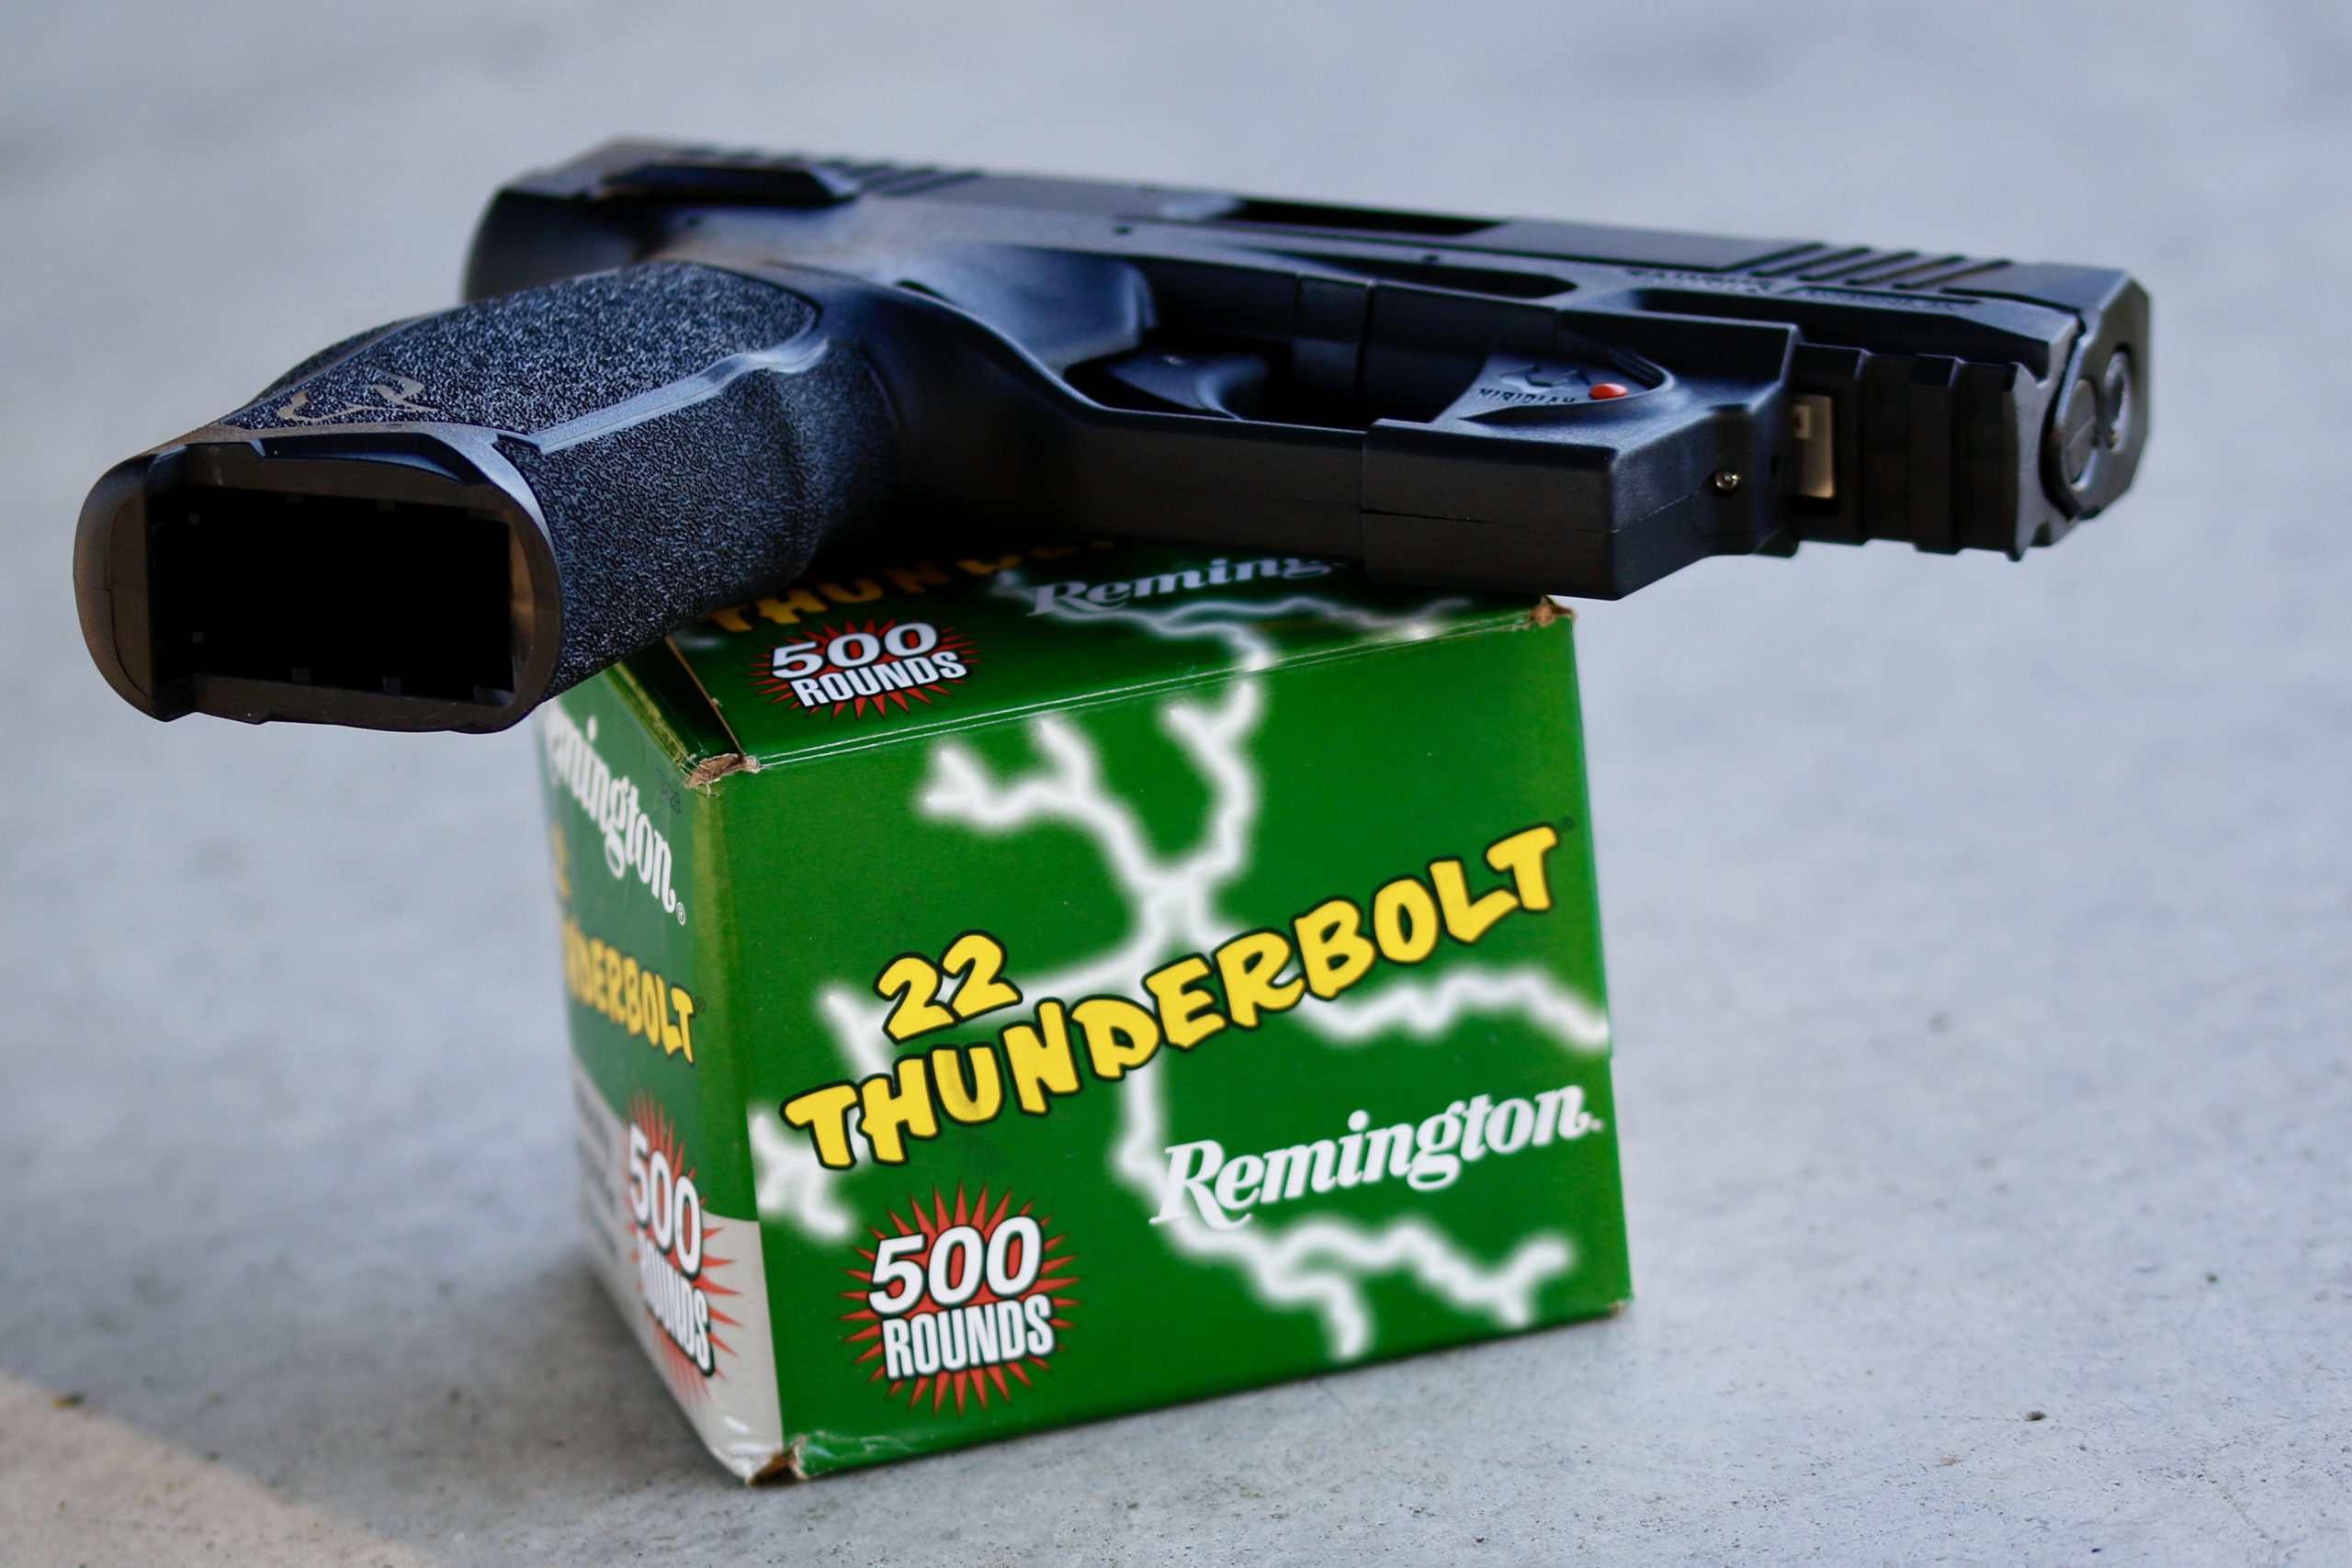 Taurus TX22 mid-sized rimfire pistol on top of a box of Remington 22 Thunderbolt cartridges